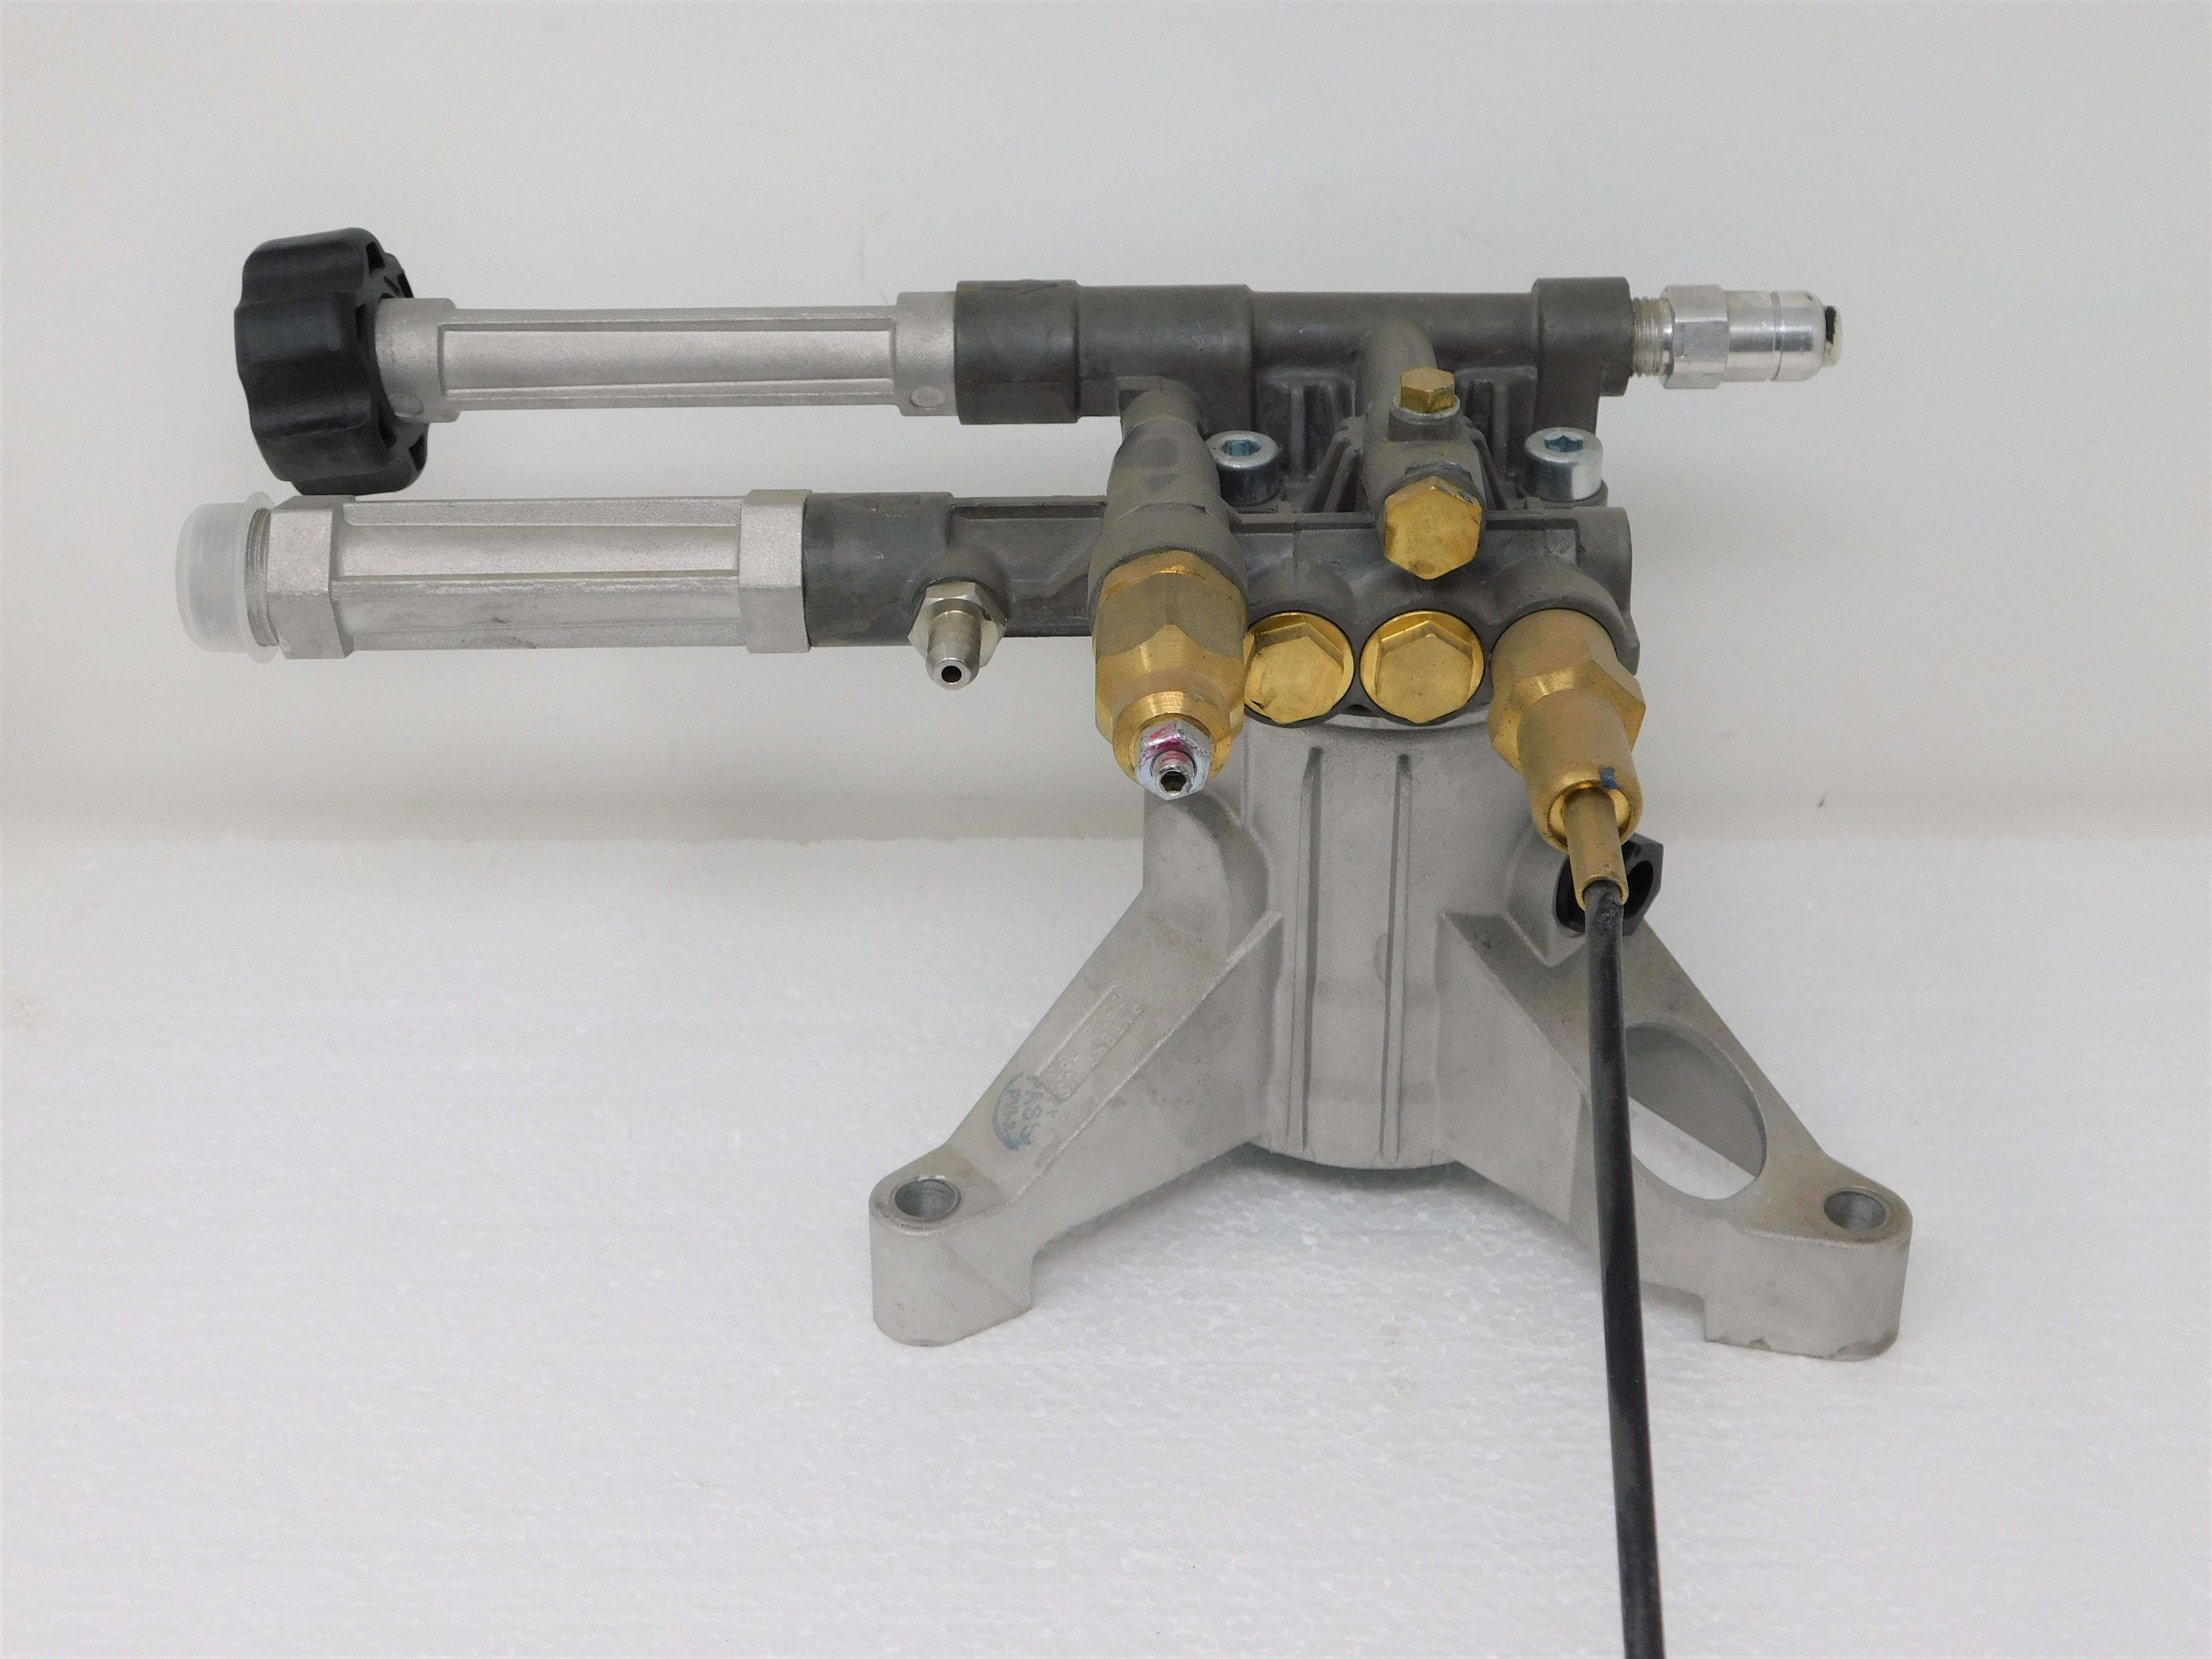 AR Pressure Washer Vertical Replacement Pump 2800psi 2.3gpm #SRMW23G28